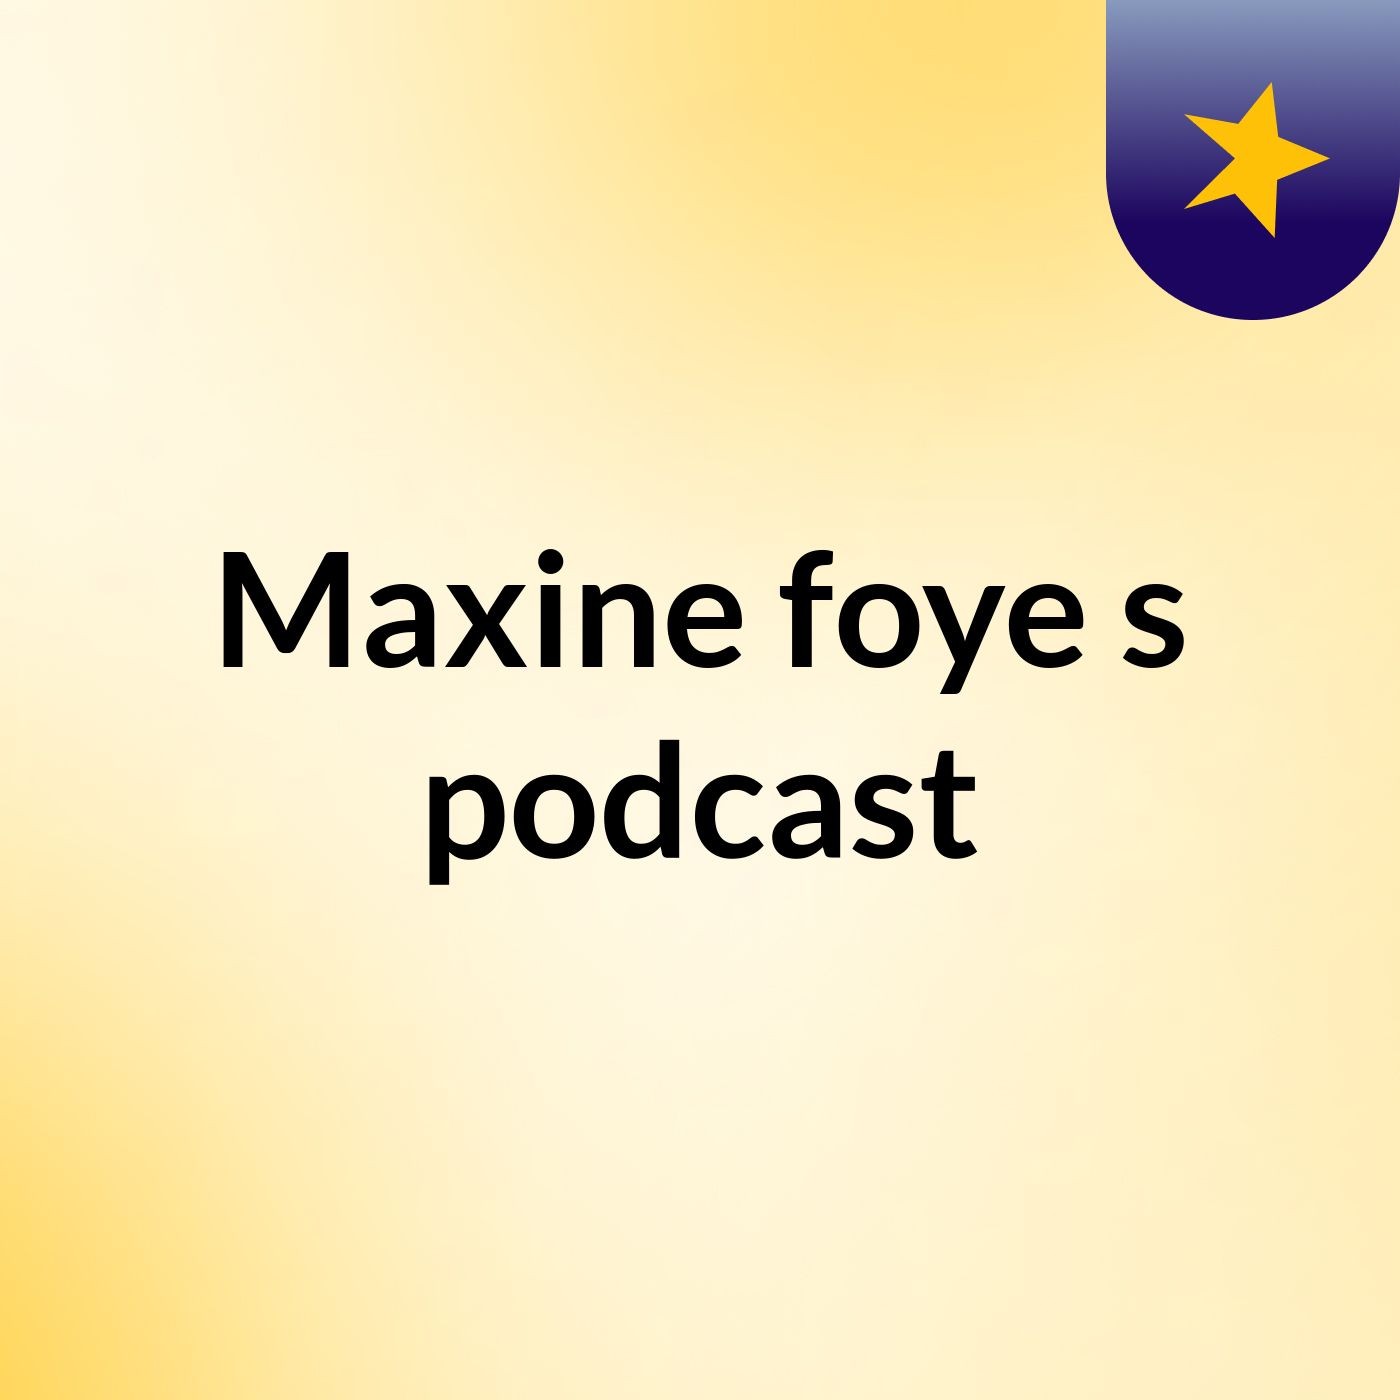 Maxine foye's podcast